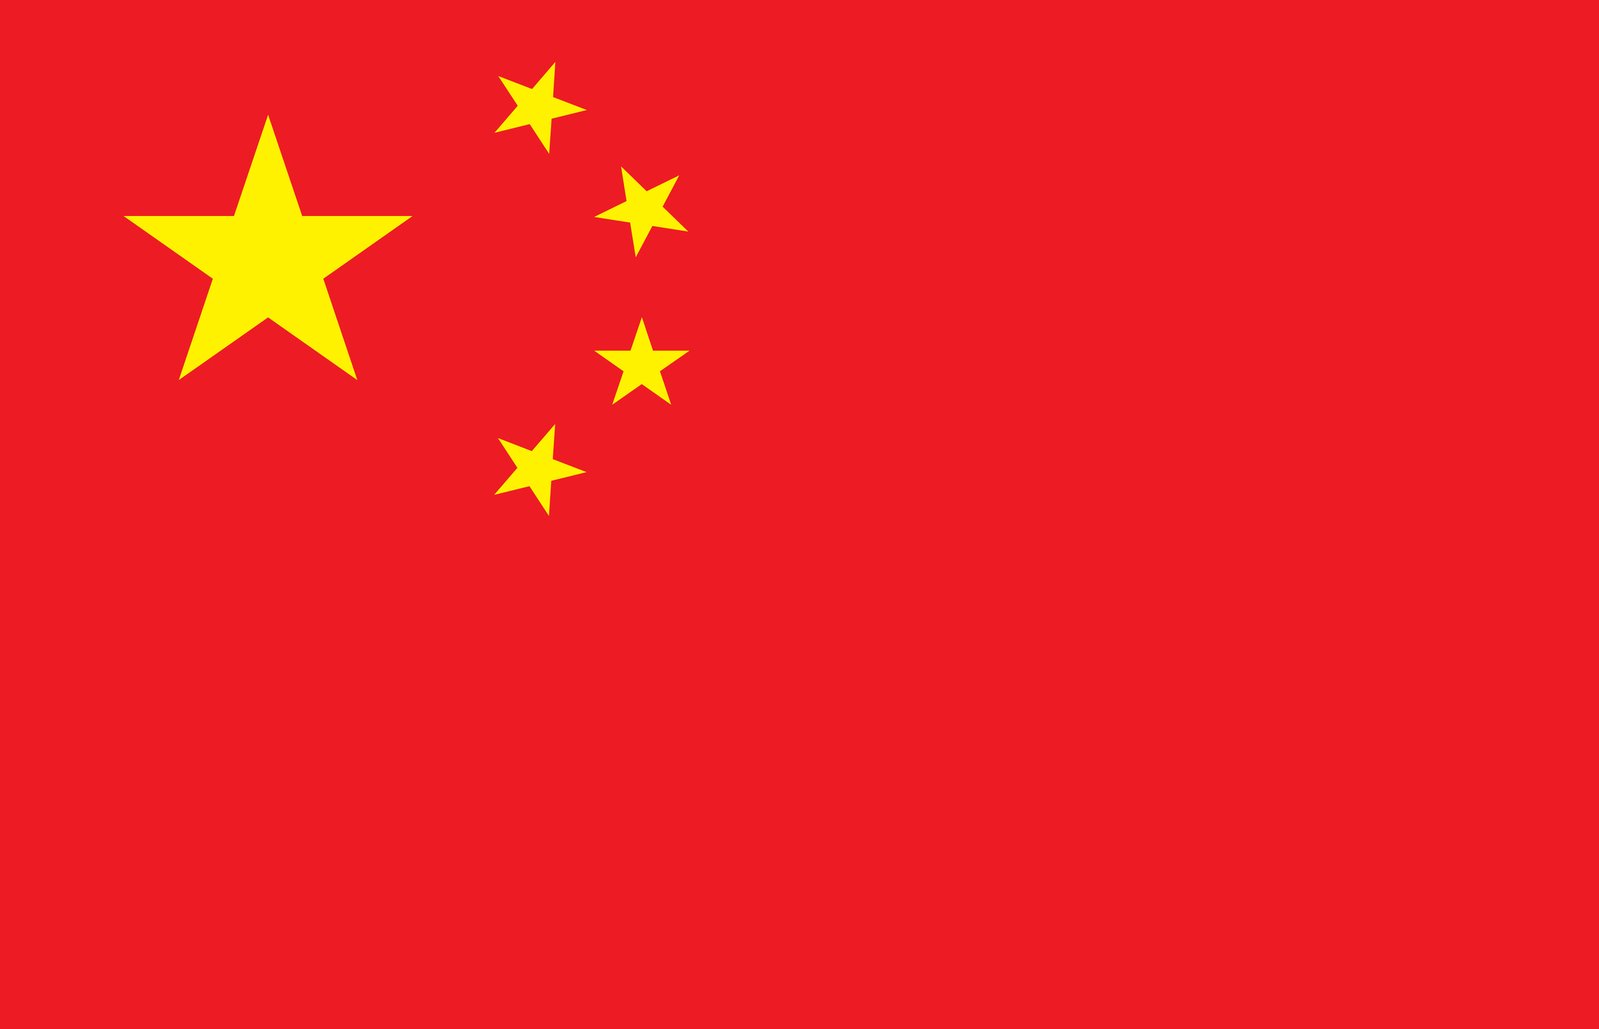 Scarica gratis foto della bandiera della Cina | FreeImages